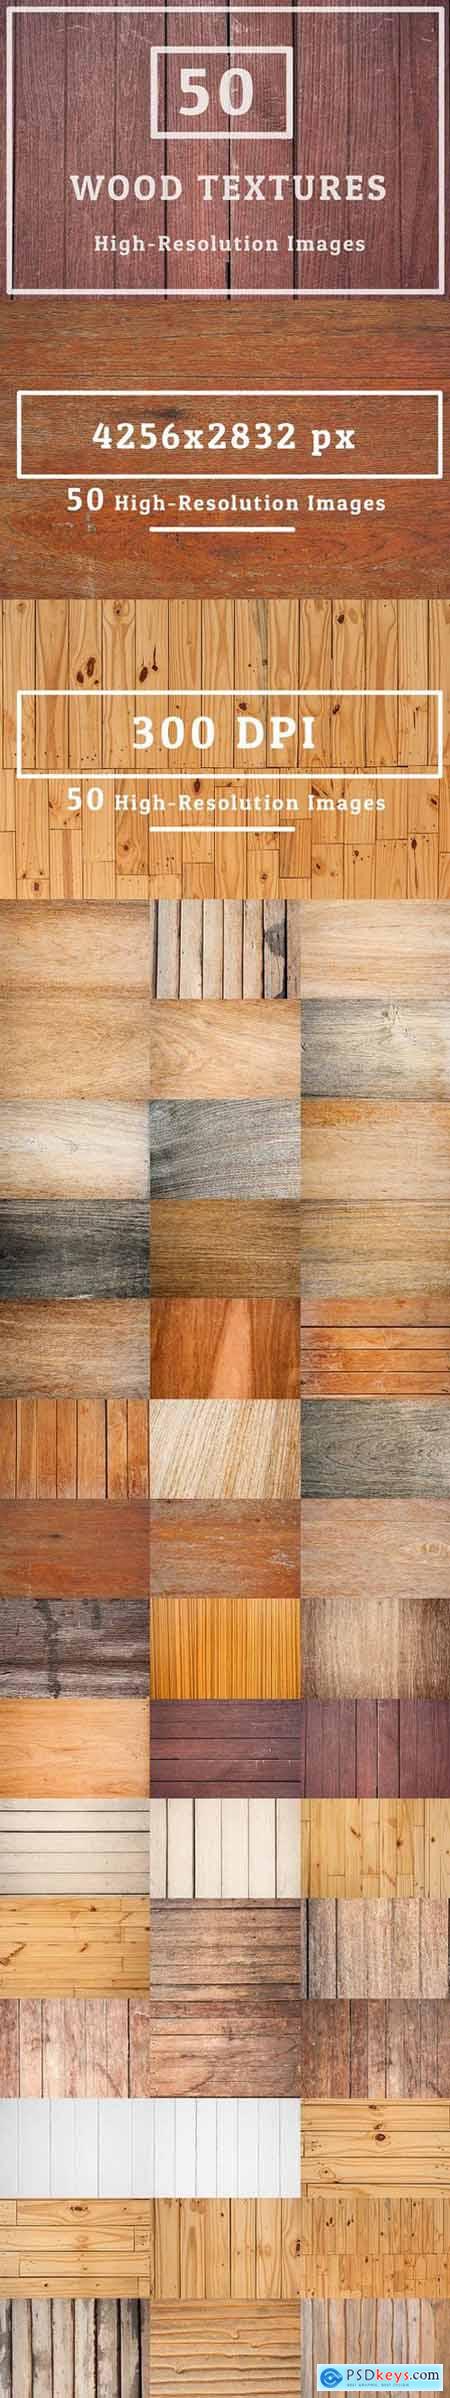 50 Wood Texture Background Set 07